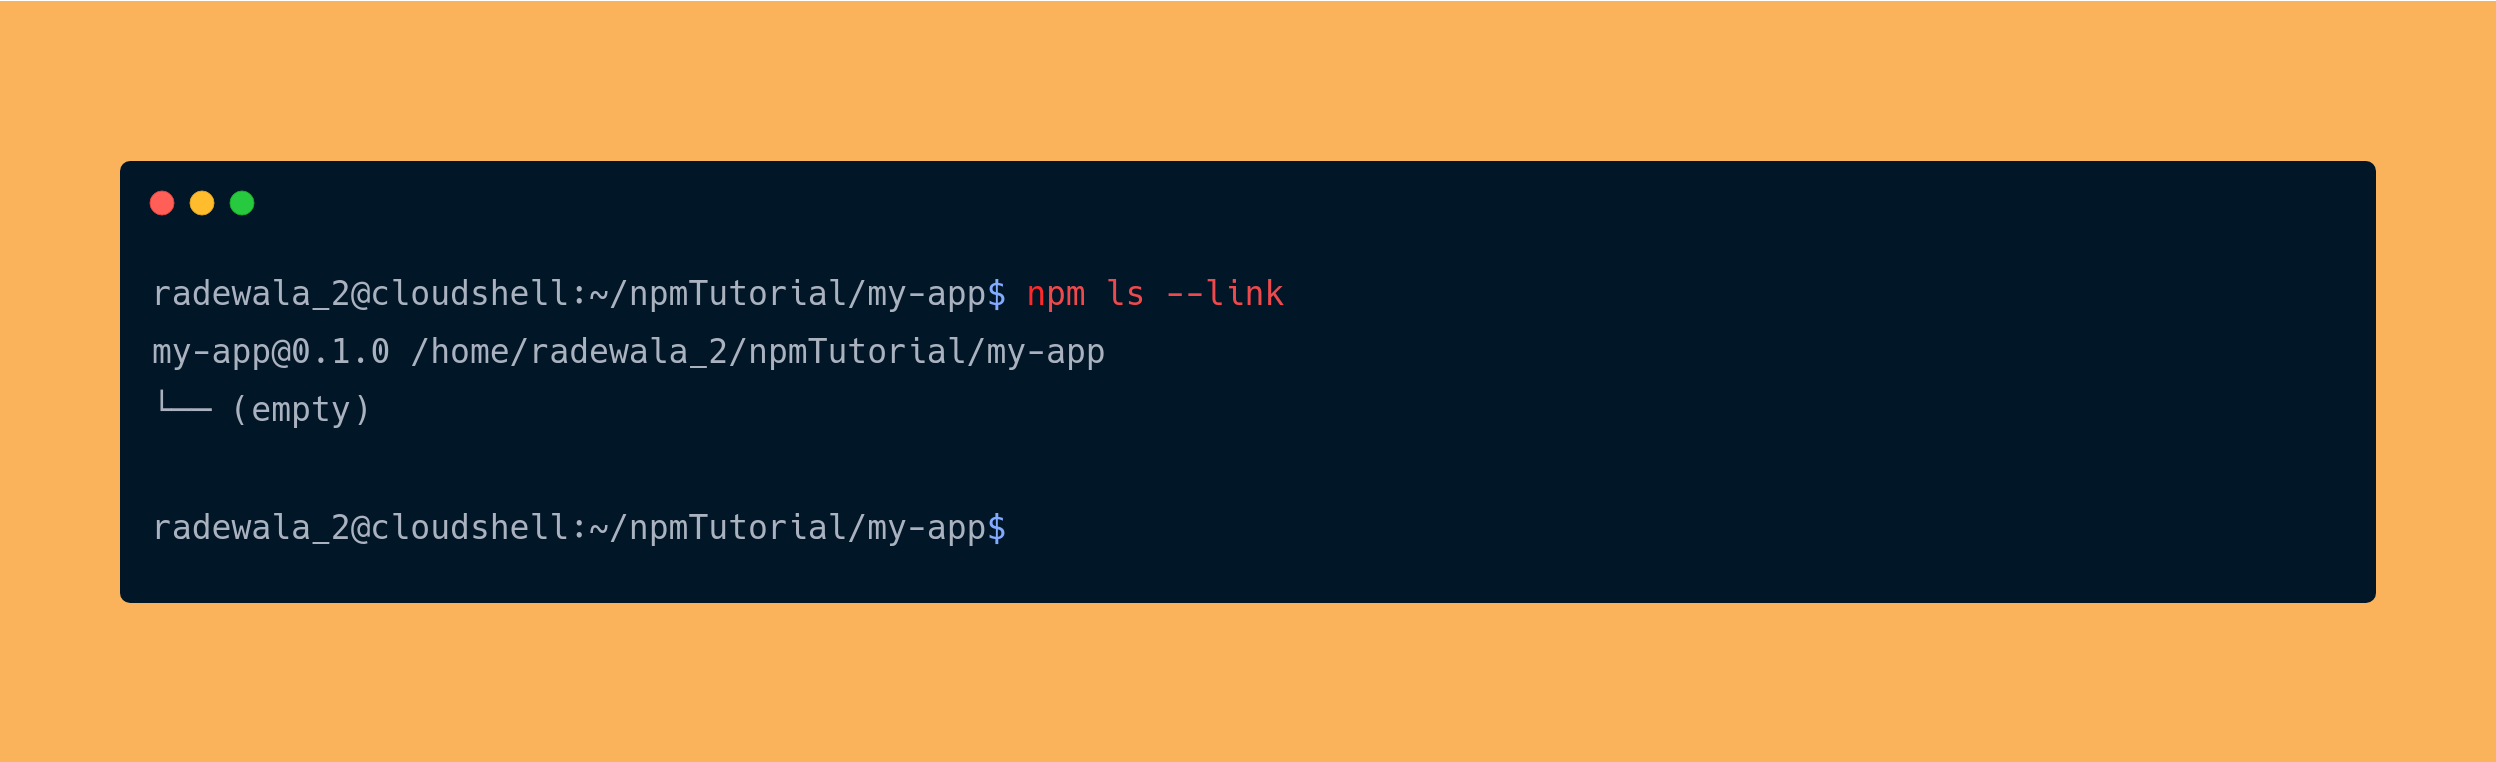 output the npm ls --link